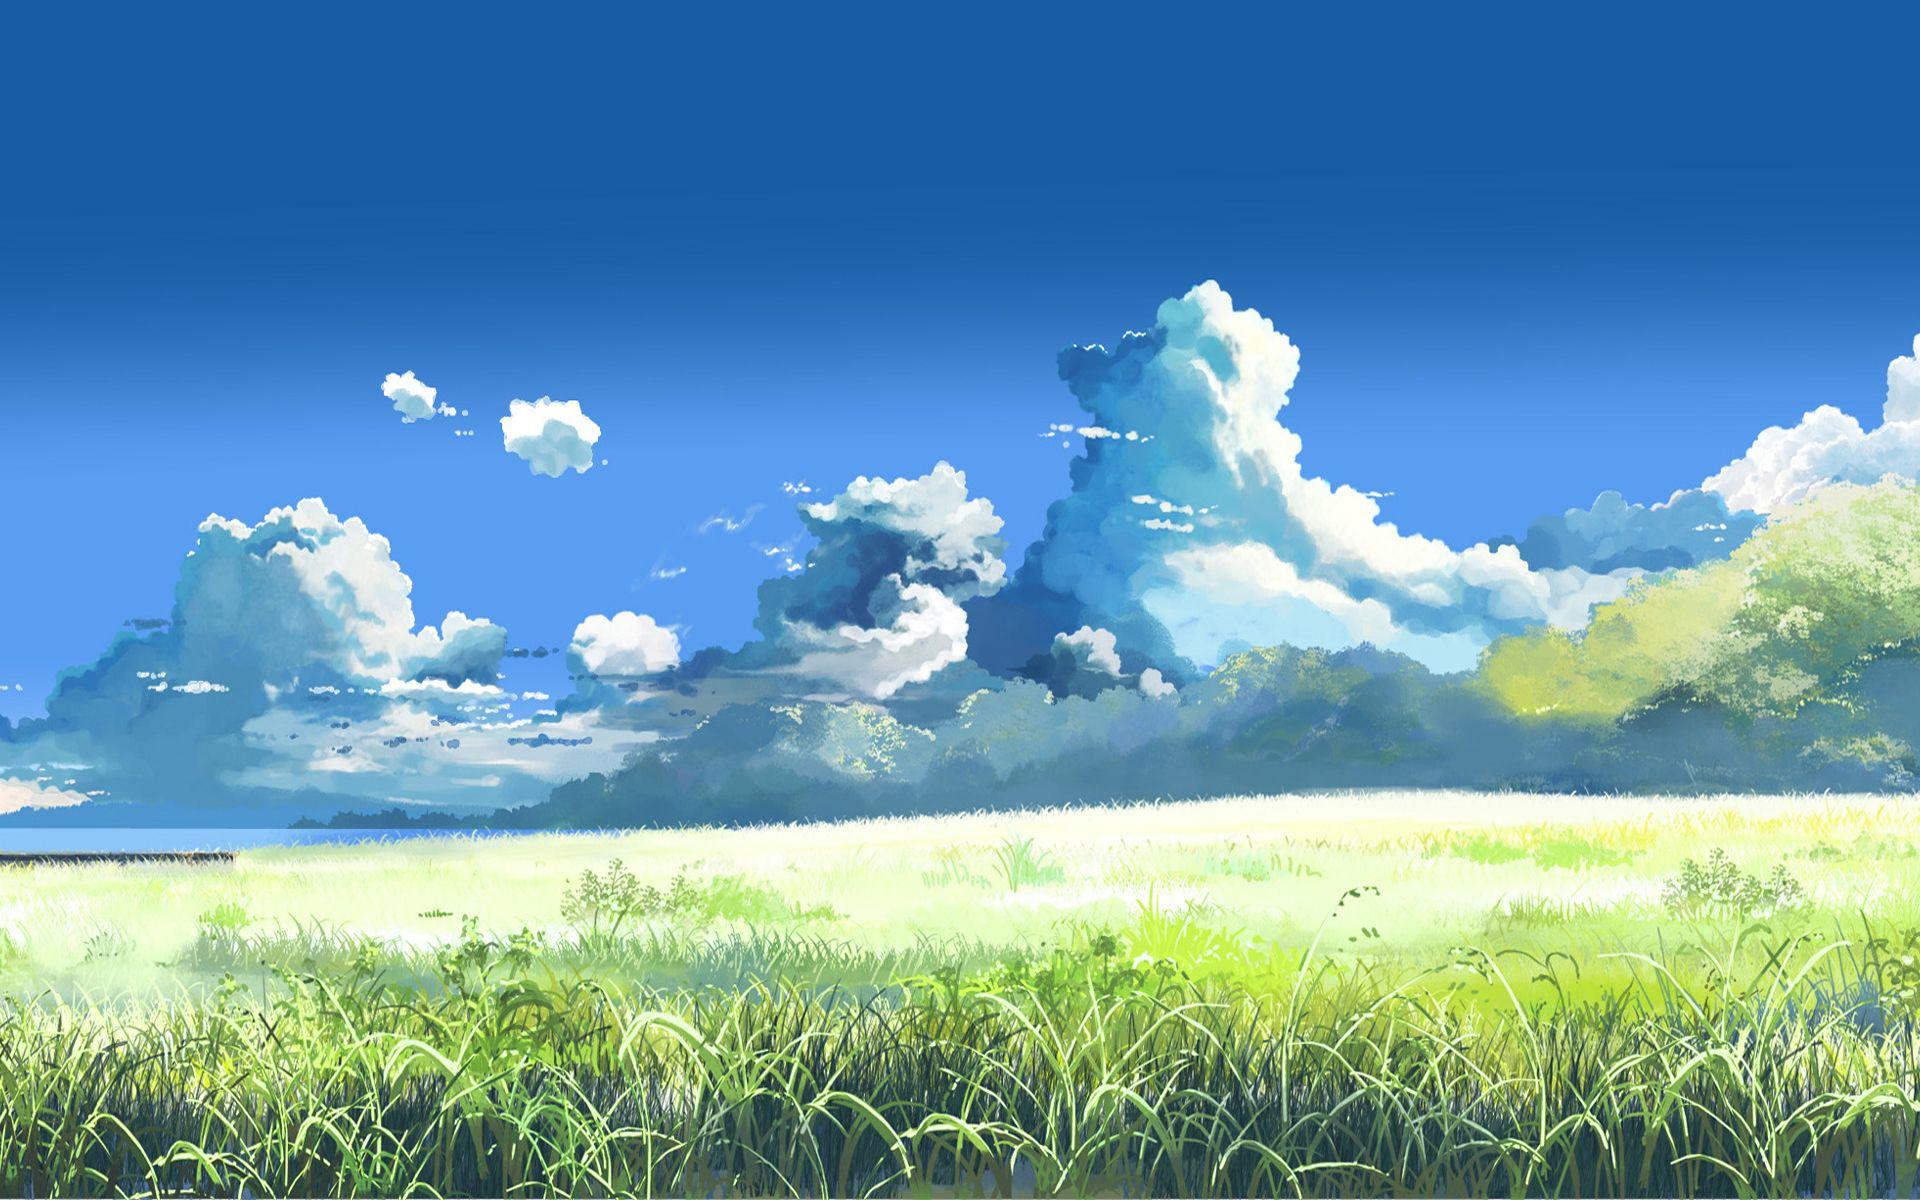 Anime Flower Field Scenery Wallpapers Wallpaper Cave ✮ anime art ✮ summer time. anime flower field scenery wallpapers